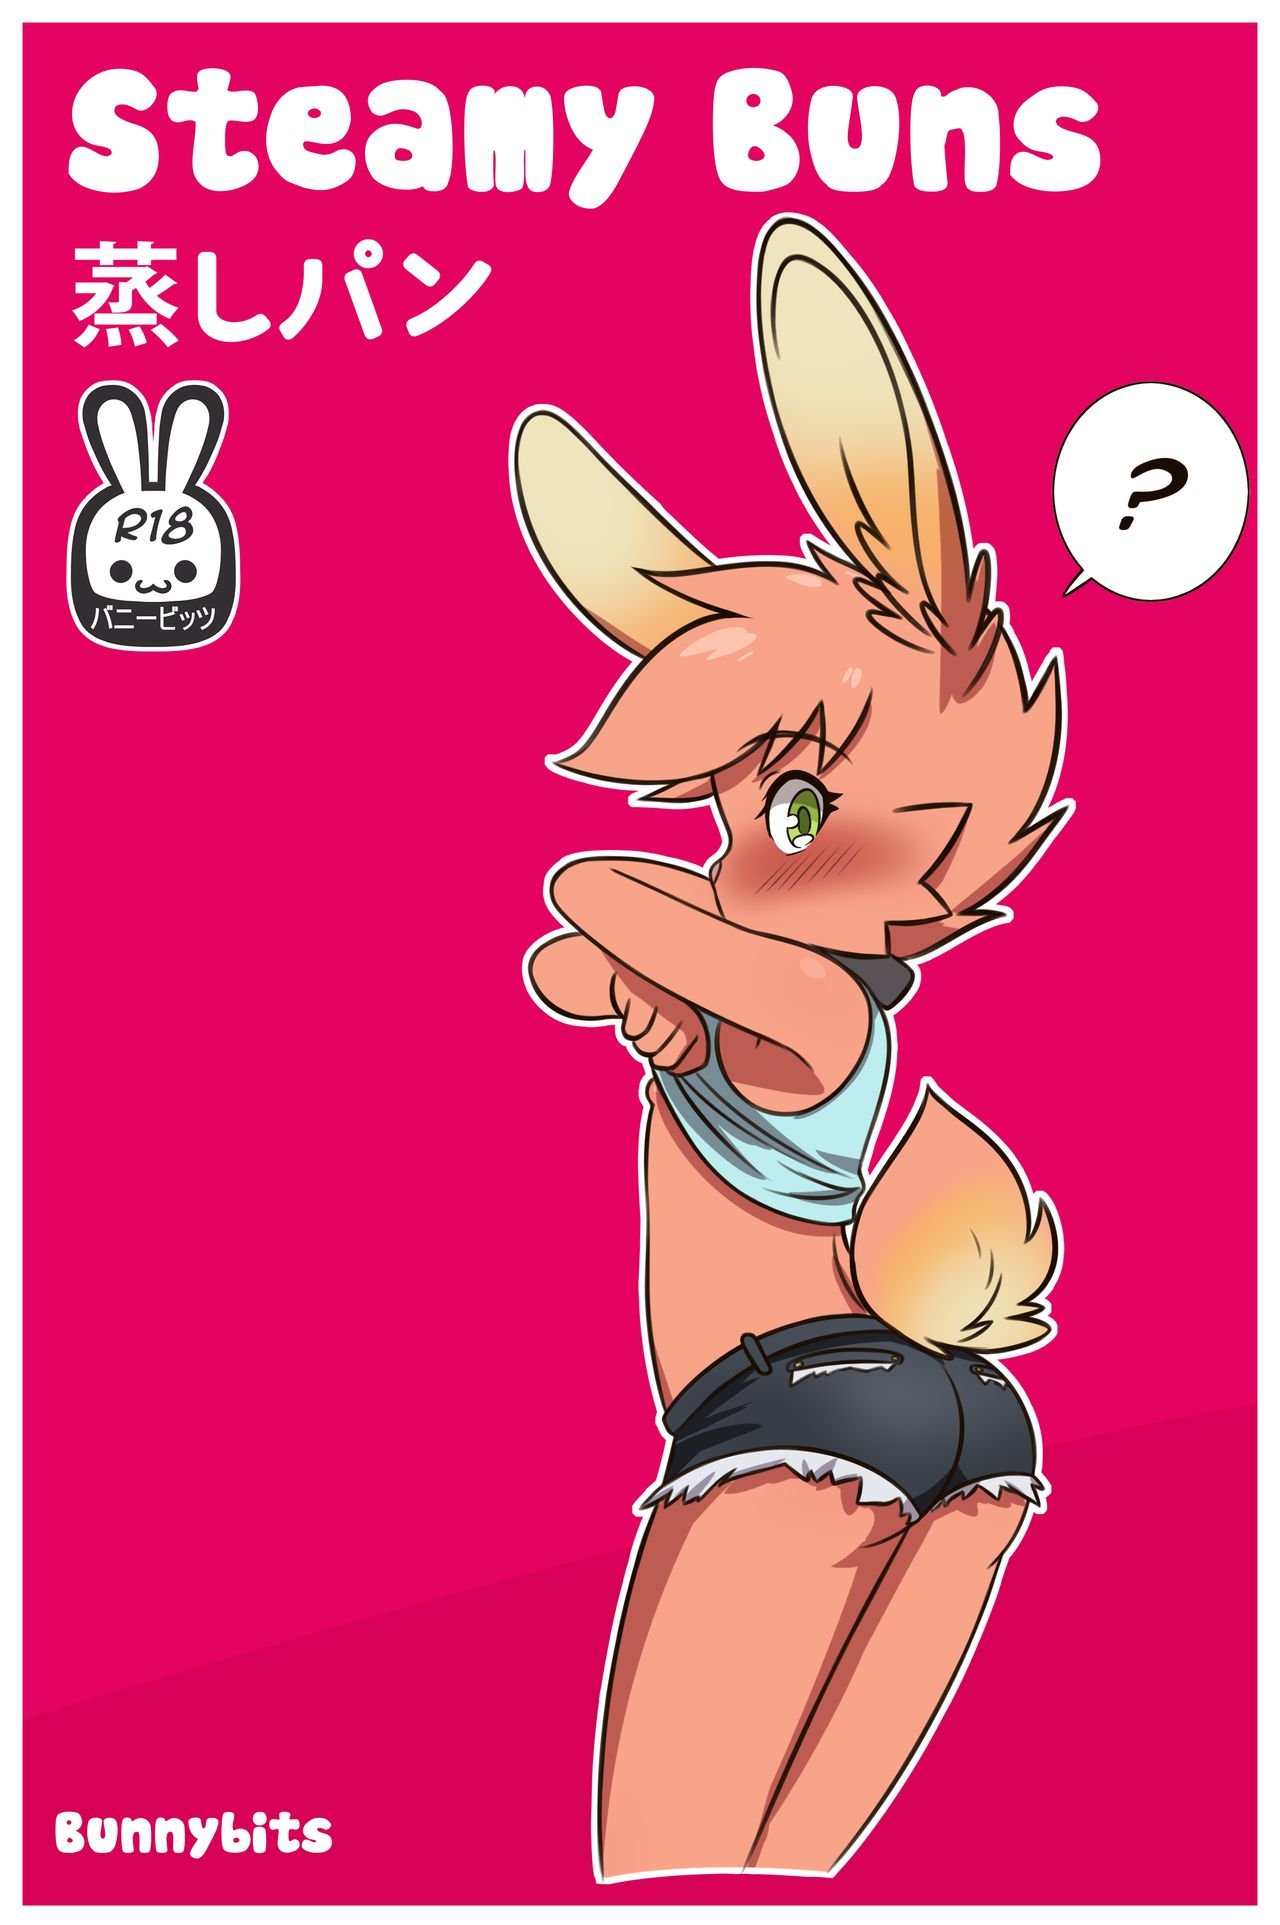 3d Furry Bunny - Bunnybits - Steamy Buns furry porn comic